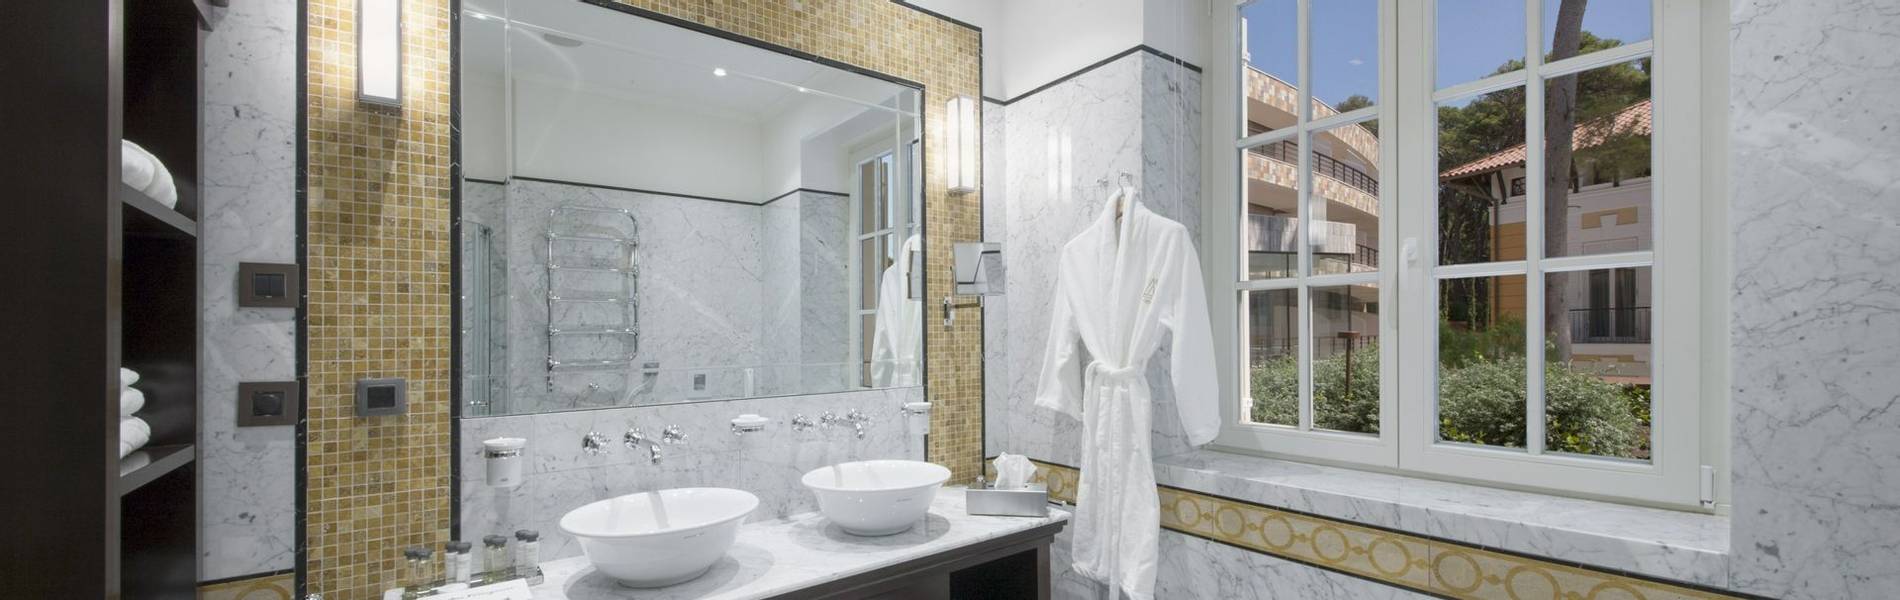 17a. Boutique hotel Alhambra_bathroom (1).jpg